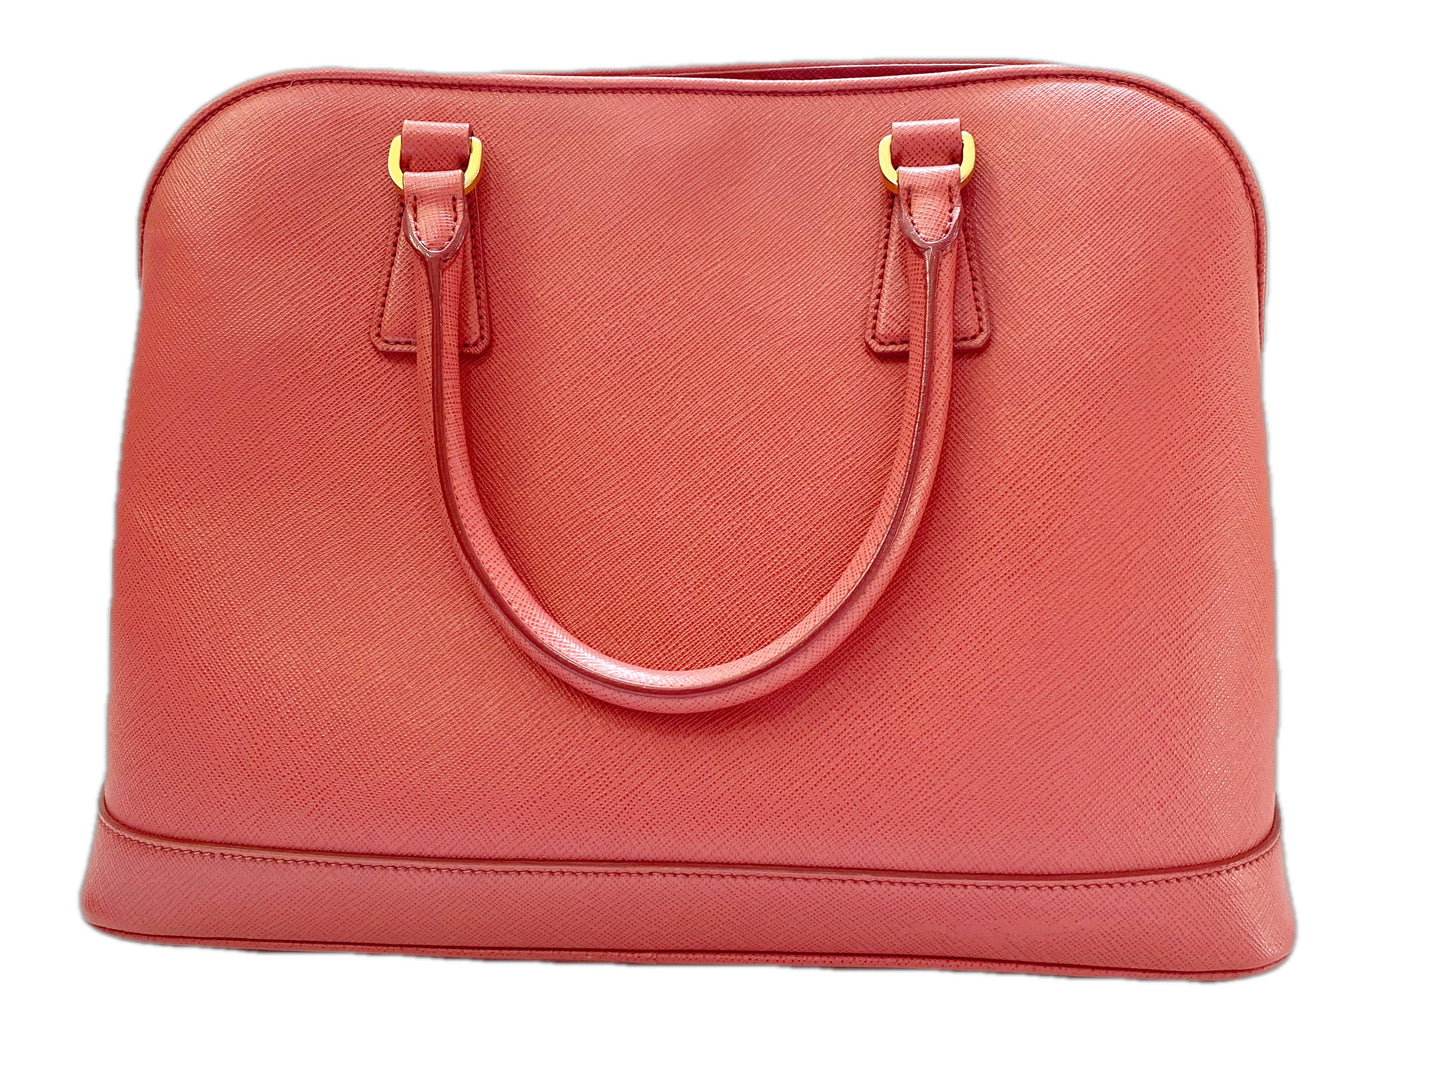 Bags, Prada Pink Saffiano Bag Medium Size In Baby Pink